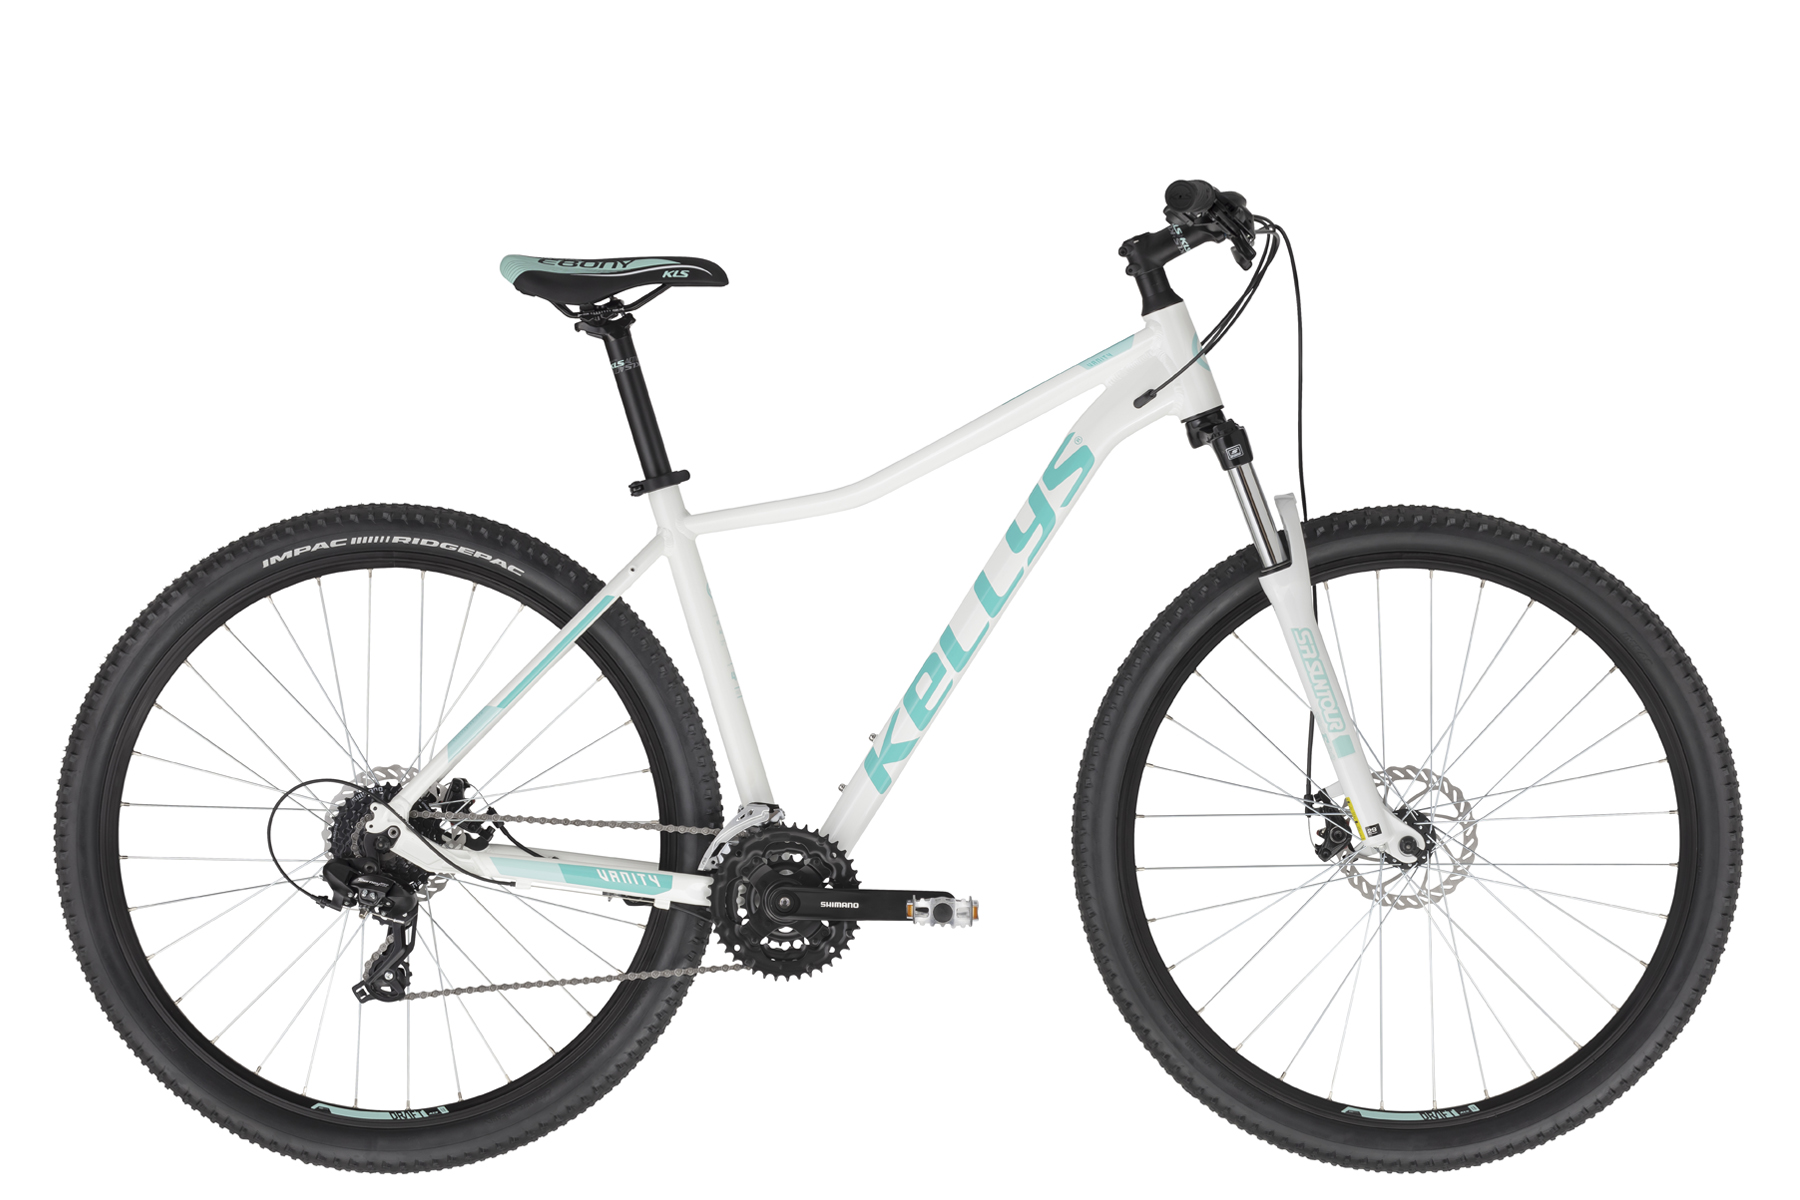 <strong>Bicicleta usoara cu cadrul de aluminiu, roti de 29" si frane pe disc mecanice, o bicicleta de munte ideala pentru femei inalte.</strong></p><p><strong>Bicicleta mtb hardtail de dama 29-er , cu transmisie de 3*8 viteze si 2 ani garantie in magazinul Doua Roti.</strong></p><p><strong>Cadru:</strong> KELLYS KLC 29 - Lady Sport Geometry<br /><strong>Marime cadru:</strong> M / L<br /><strong>Furca:</strong> SR SUNTOUR XCE28 (29), 100mm, coil spring<br /><strong>Set cuveta:</strong> semi-integrated<br /><strong>B.B.parts:</strong>&nbsp;cartridge (122mm)<br /><strong>Angrenaj:</strong> SHIMANO TY301 (42x34x24T) - length 175mm<br /><strong>Manete schimbator:</strong> SHIMANO ST-EF510-8 EZ-fire Plus<br /><strong>Schimbator fata:</strong> SHIMANO TY700 (34.9mm)<br /><strong>Schimbator spate:</strong> SHIMANO TX800 (direct mount)<br /><strong>Viteze:</strong> 24<br /><strong>Pinion caseta:</strong> SHIMANO CS-HG200-8 (12-32T)<br /><strong>Lant:</strong> KMC Z8 (108 links)<br /><strong>Frane:</strong> C-STAR CX7 Mechanical Disc<br /><strong>Disc frana:</strong>&nbsp;160mm front / 160mm rear<br /><strong>Manete frana:</strong> SHIMANO ST-EF510-8 EZ-fire Plus<br /><strong>Butuci:</strong> KLS Firework Disc (32 holes)<br /><strong>Janta:</strong> KLS Draft Disc 622x21 (32 holes)<br /><strong>Spite:</strong> steel<br /><strong>Anvelope:</strong> IMPAC Ridgepac 54-622 (29x2.10)<br /><strong>Pipa:</strong> KLS Active - diam 28.6mm / bar bore 31.8mm / 8&deg; / length 75mm (M), 90mm (L)<br /><strong>Ghidon:</strong> KLS Active RiseBar - diam 31.8mm / rise 18mm / width 620mm (M), 660mm (L)<br /><strong>Mansoane:</strong> KLS Advancer<br /><strong>Tija sa:</strong> KLS Active - diam 30.9mm / length 350mm (M), 400mm (L)<br /><strong>Sa:</strong> KLS Ebony Women<br /><strong>Pedale:</strong> alloy